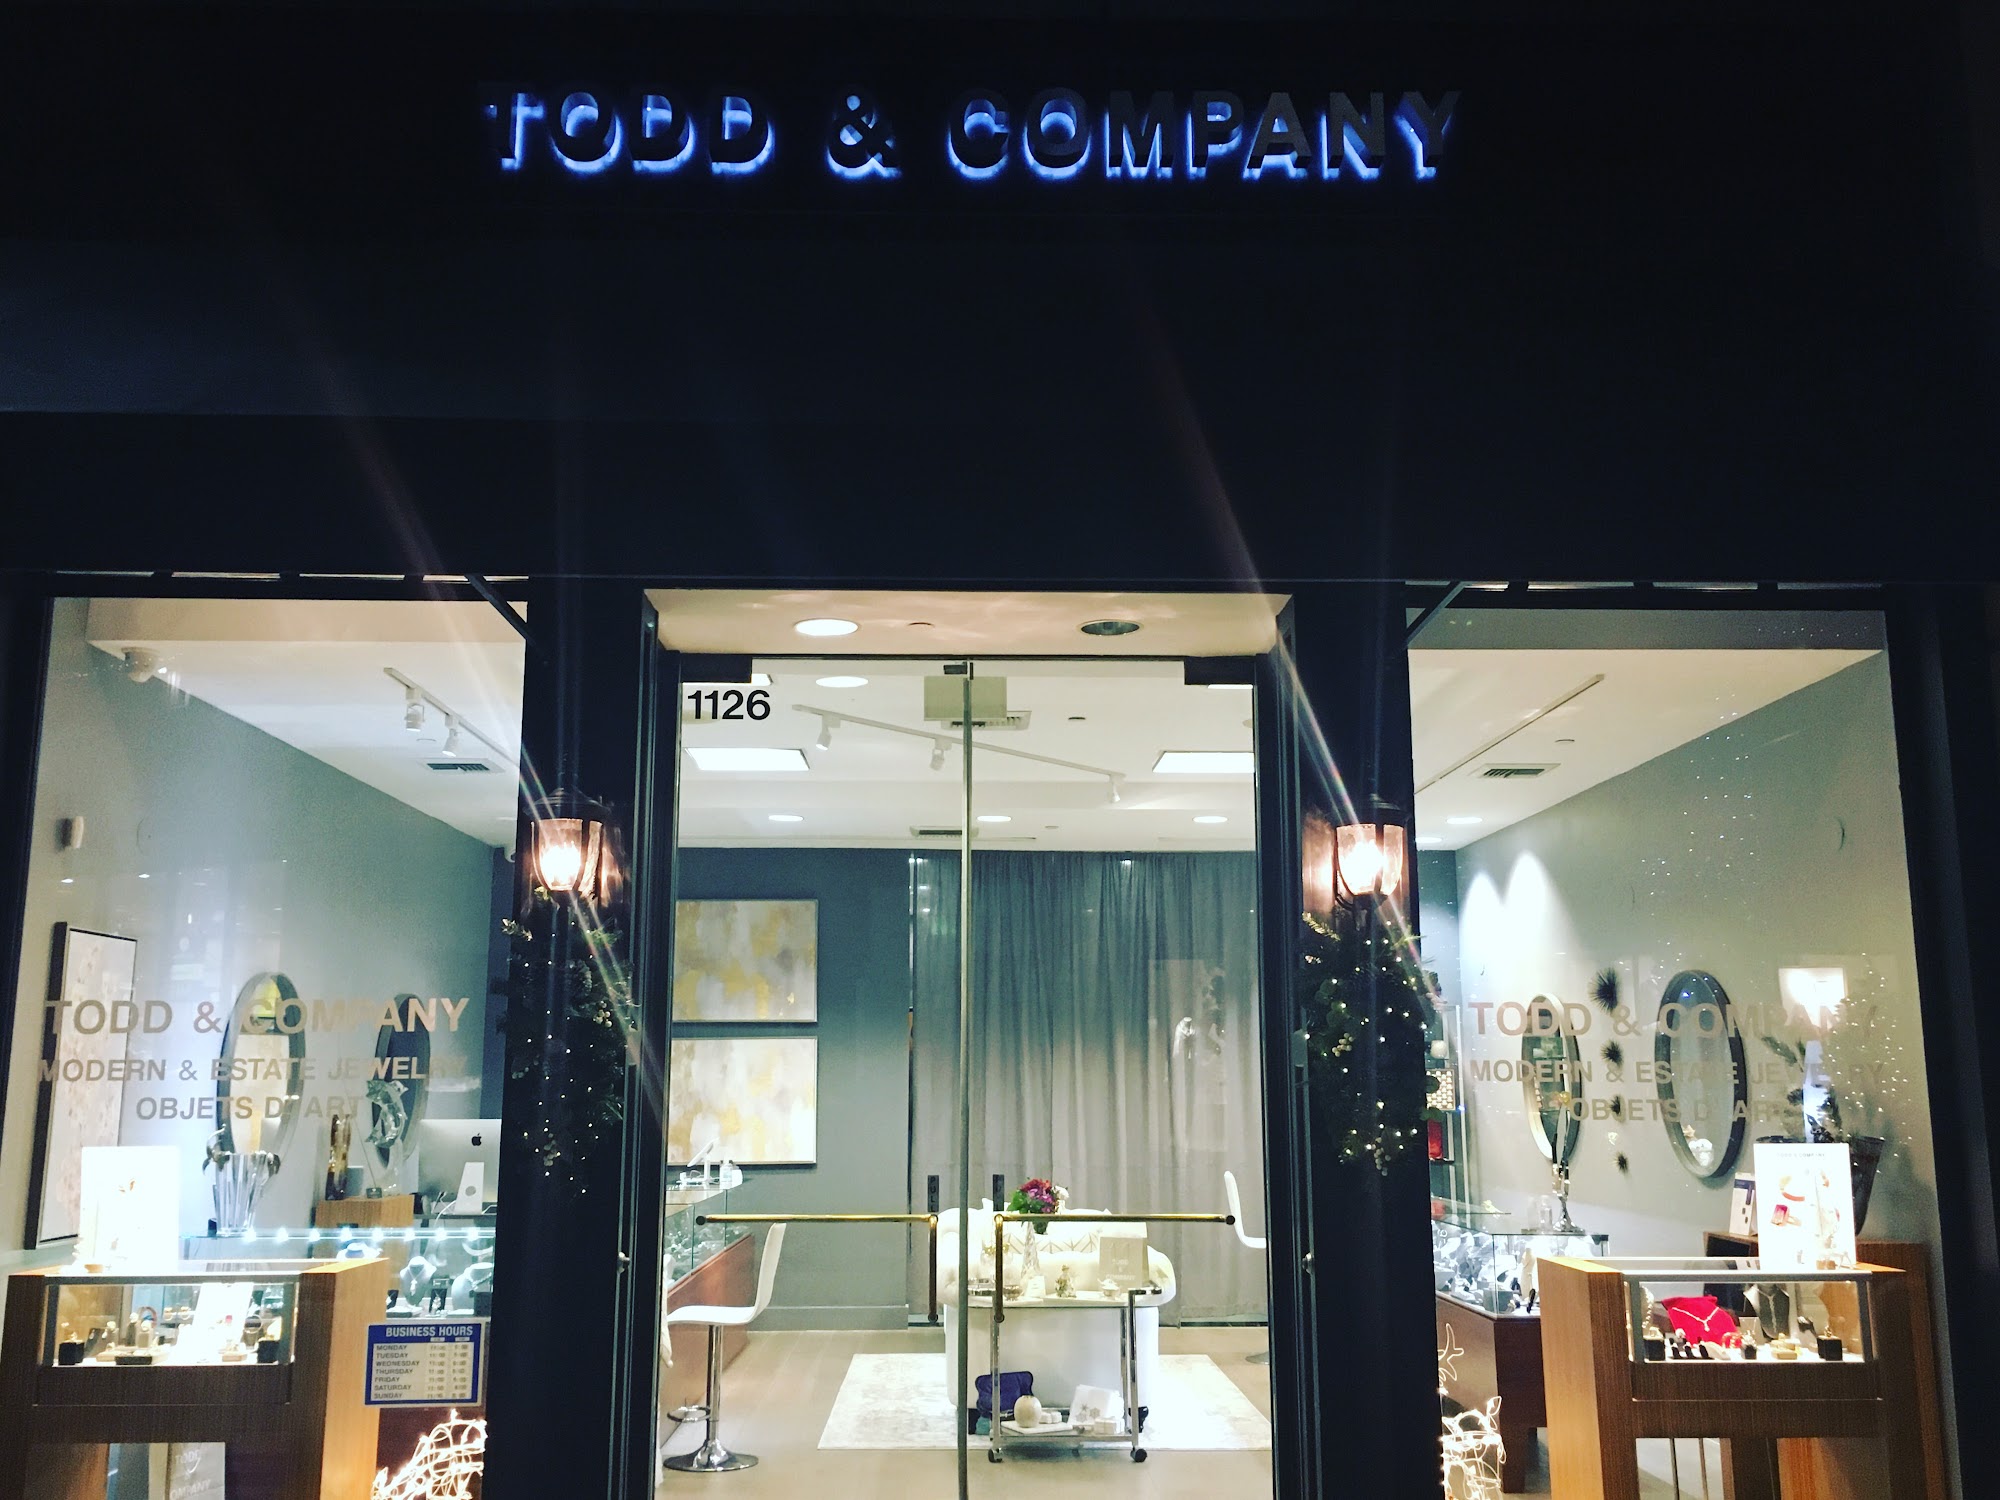 Todd & Company